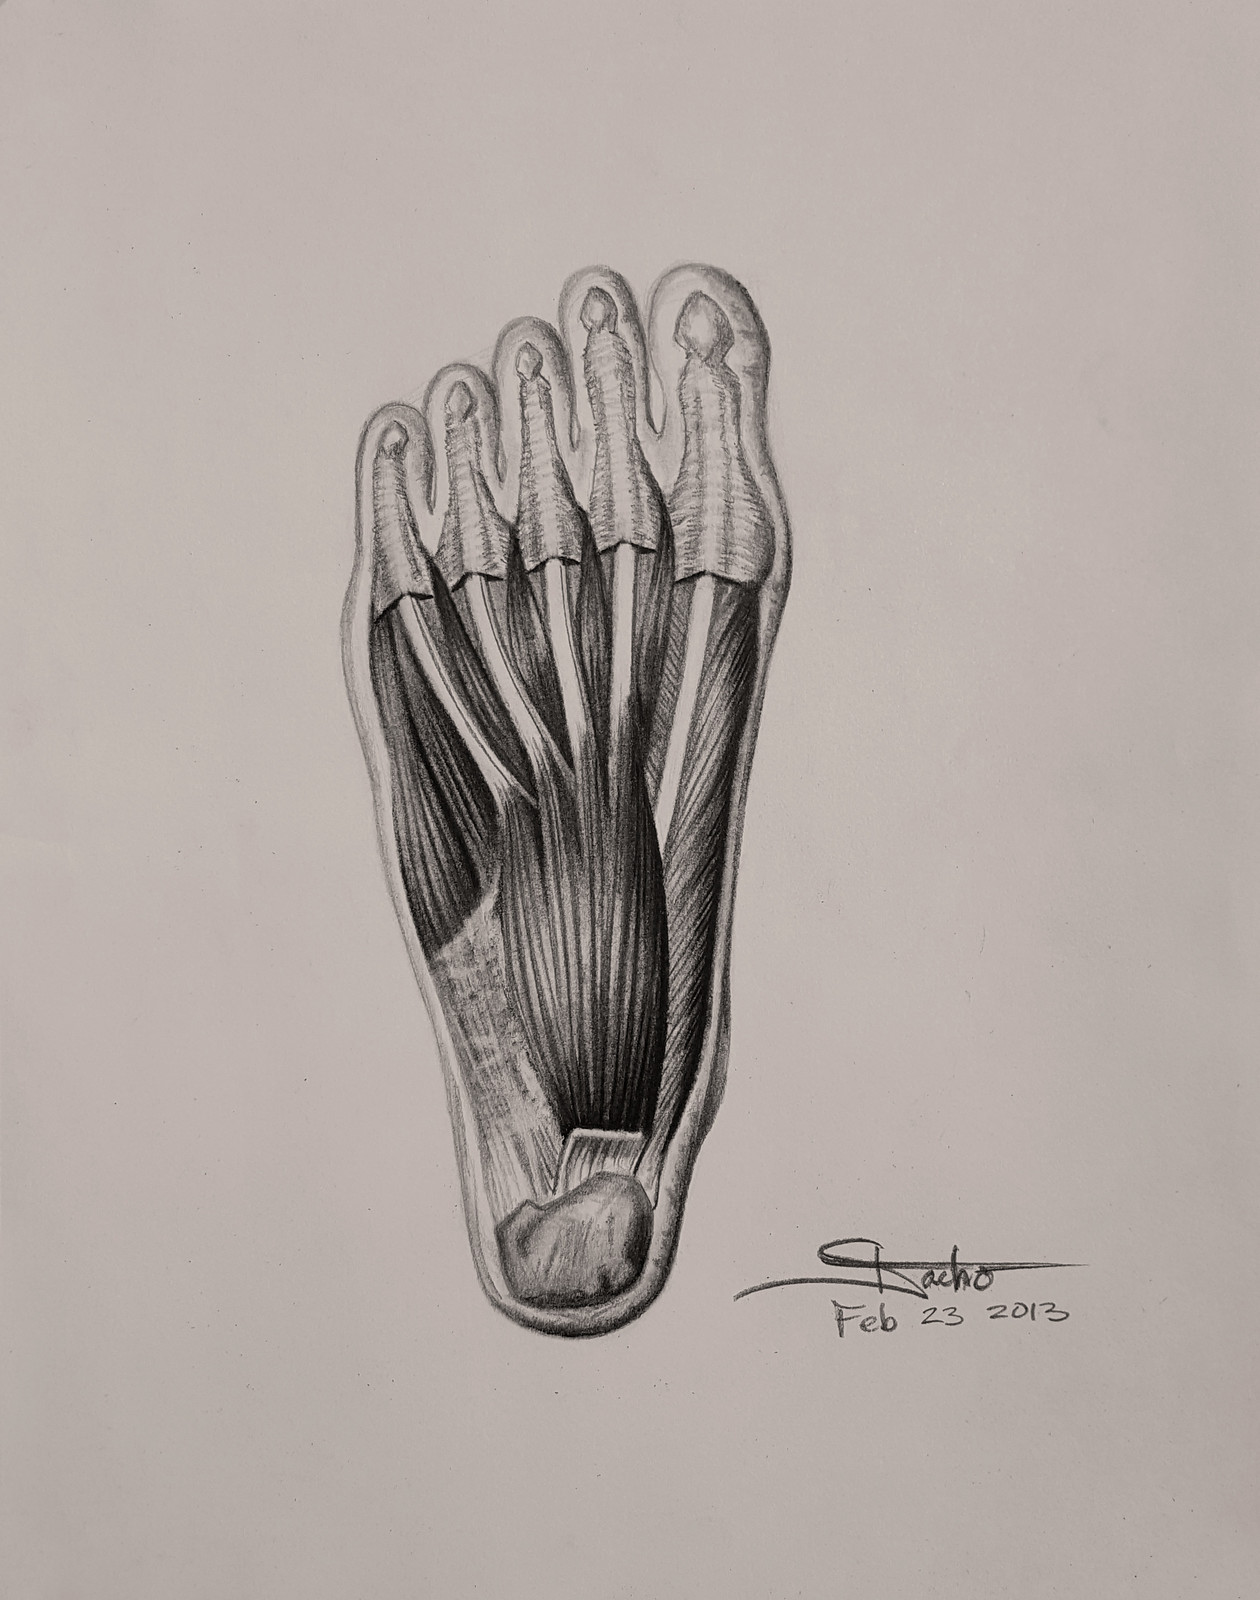 Das Foot